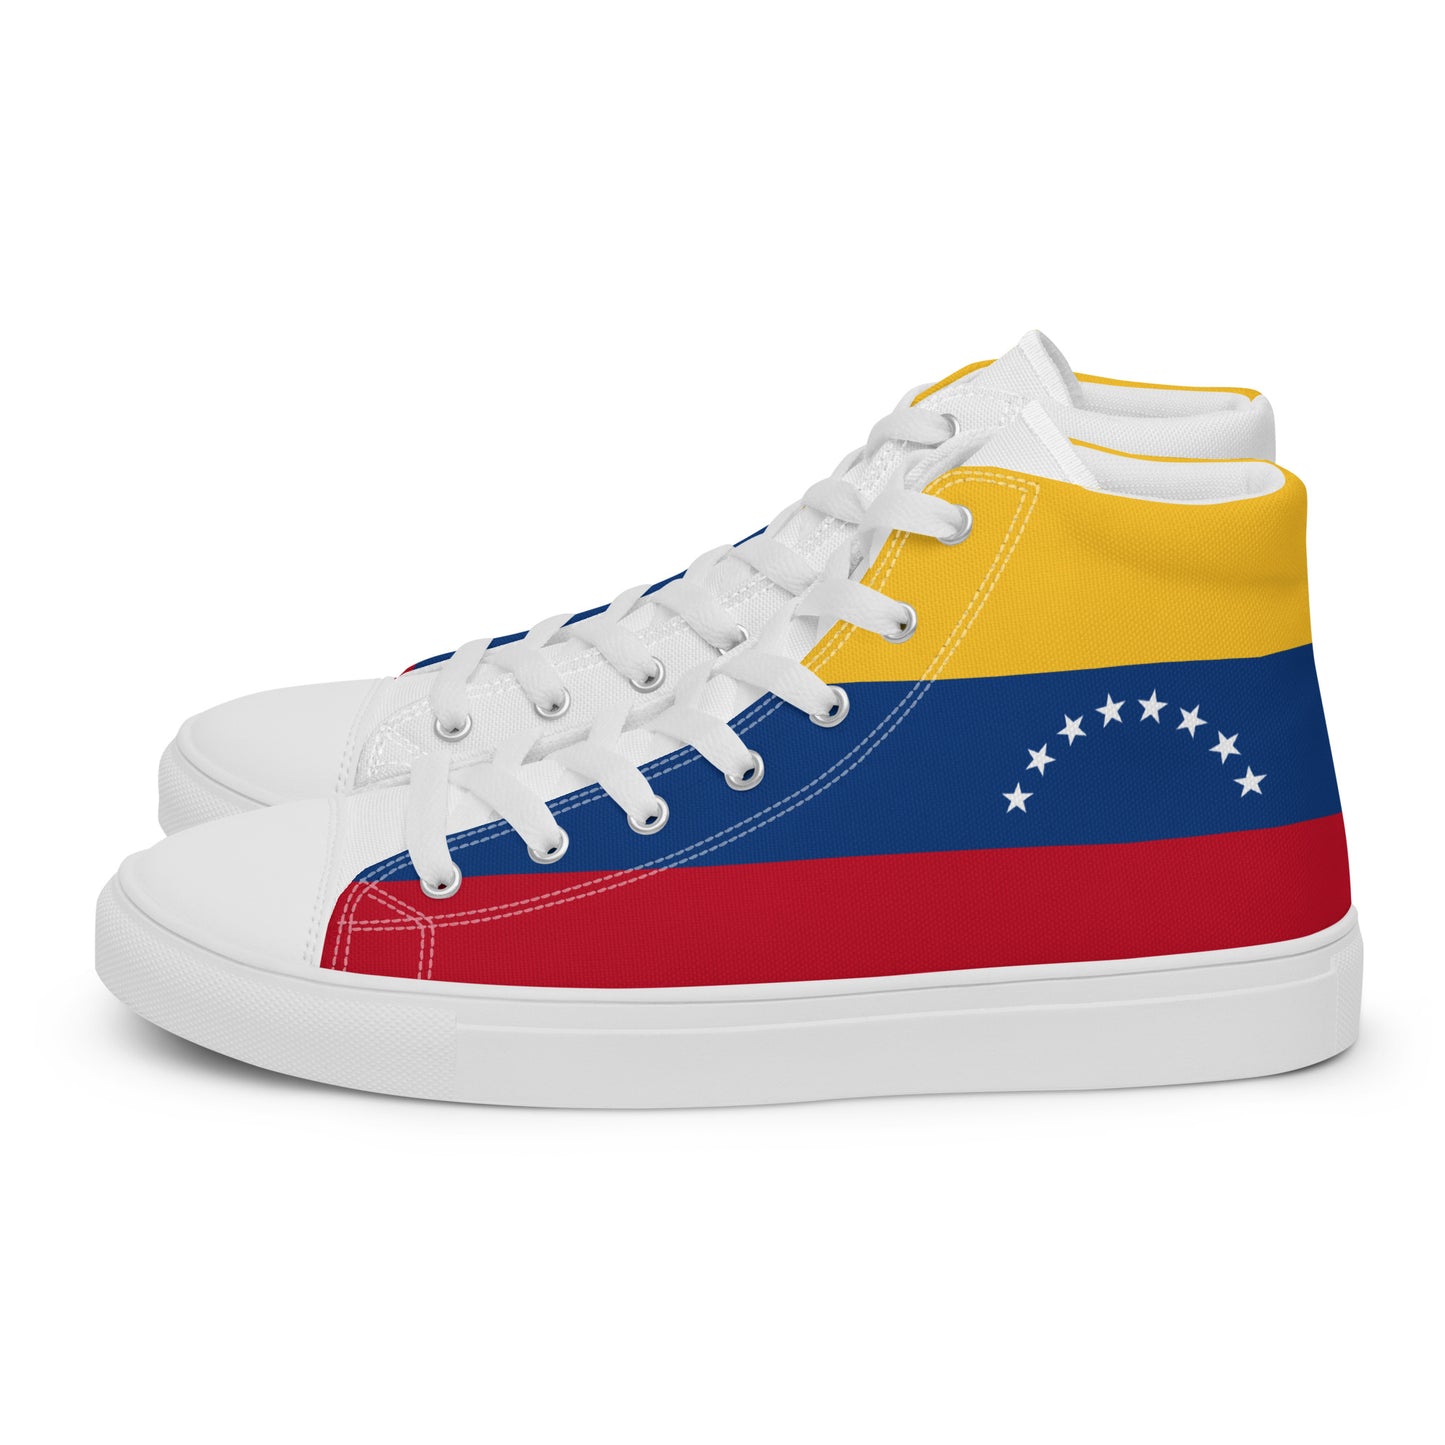 Venezuela - Men - Bandera - High top shoes